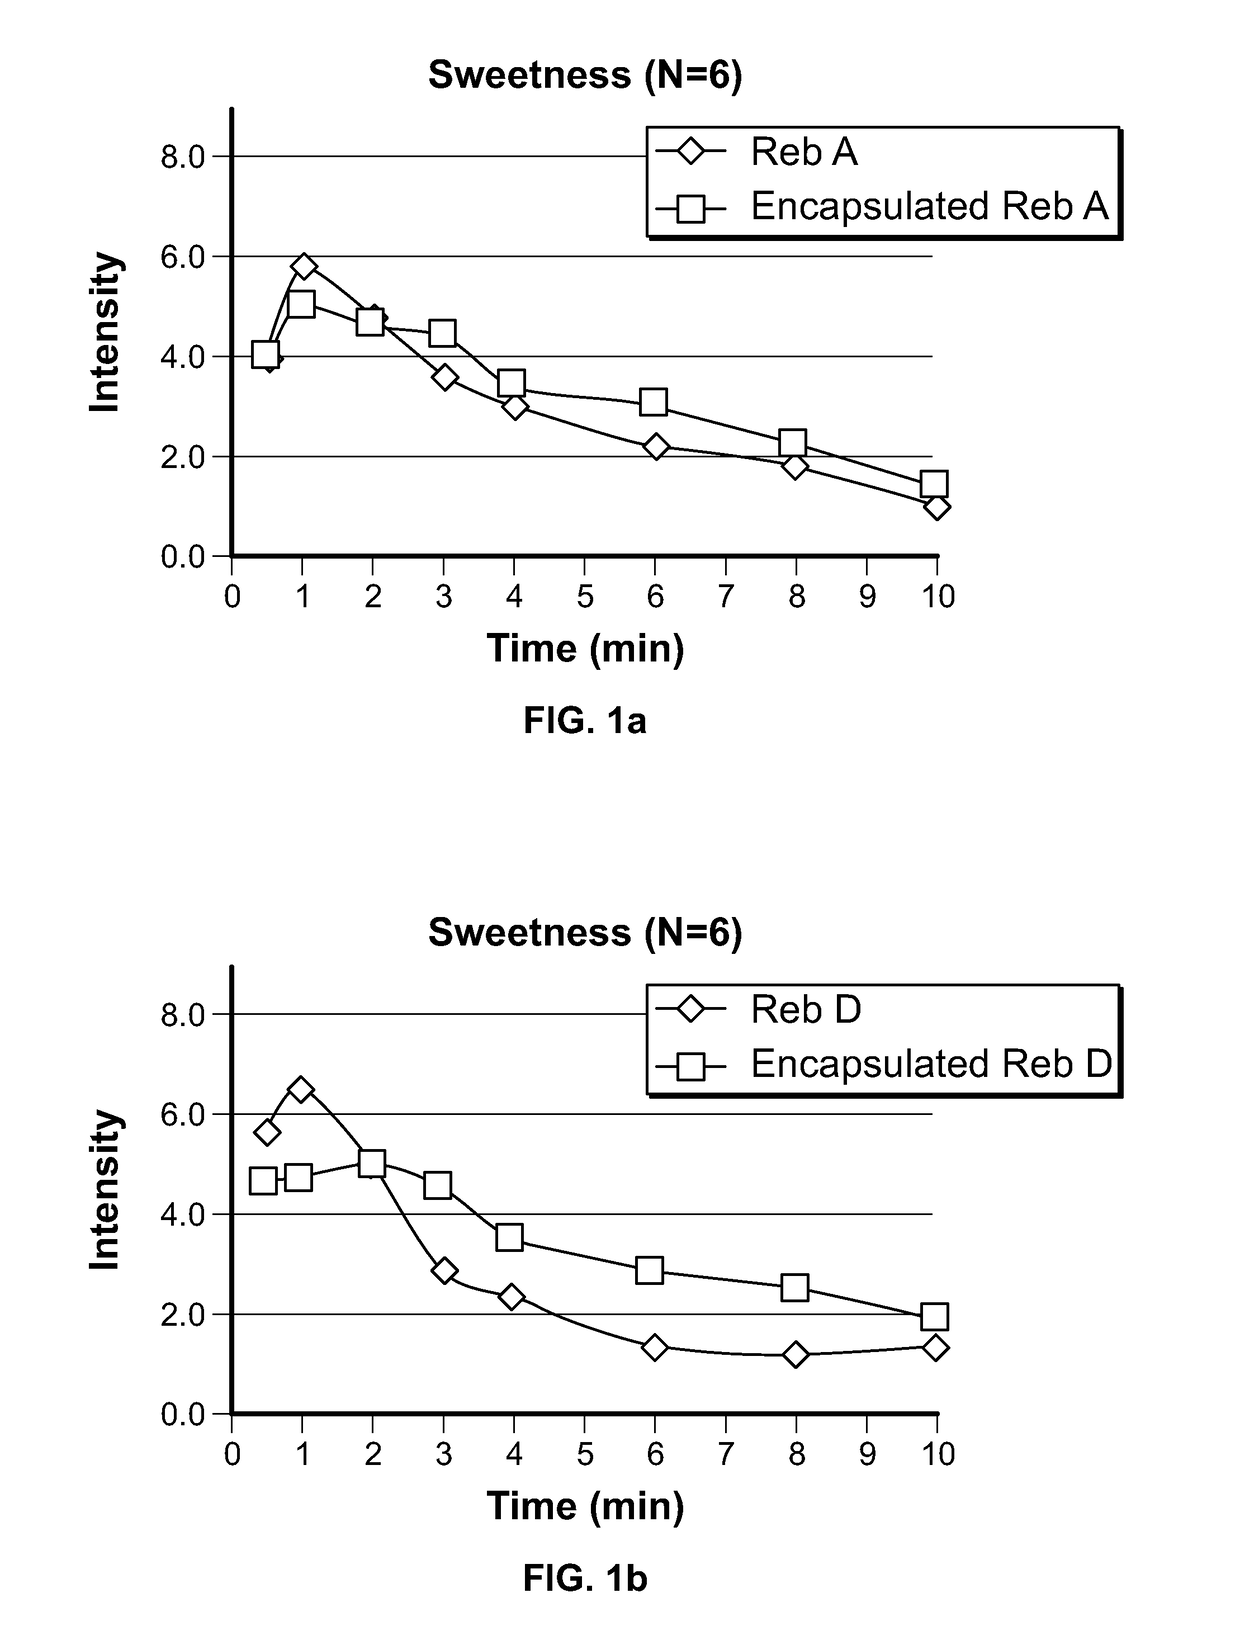 Long-lasting sweetener formulations